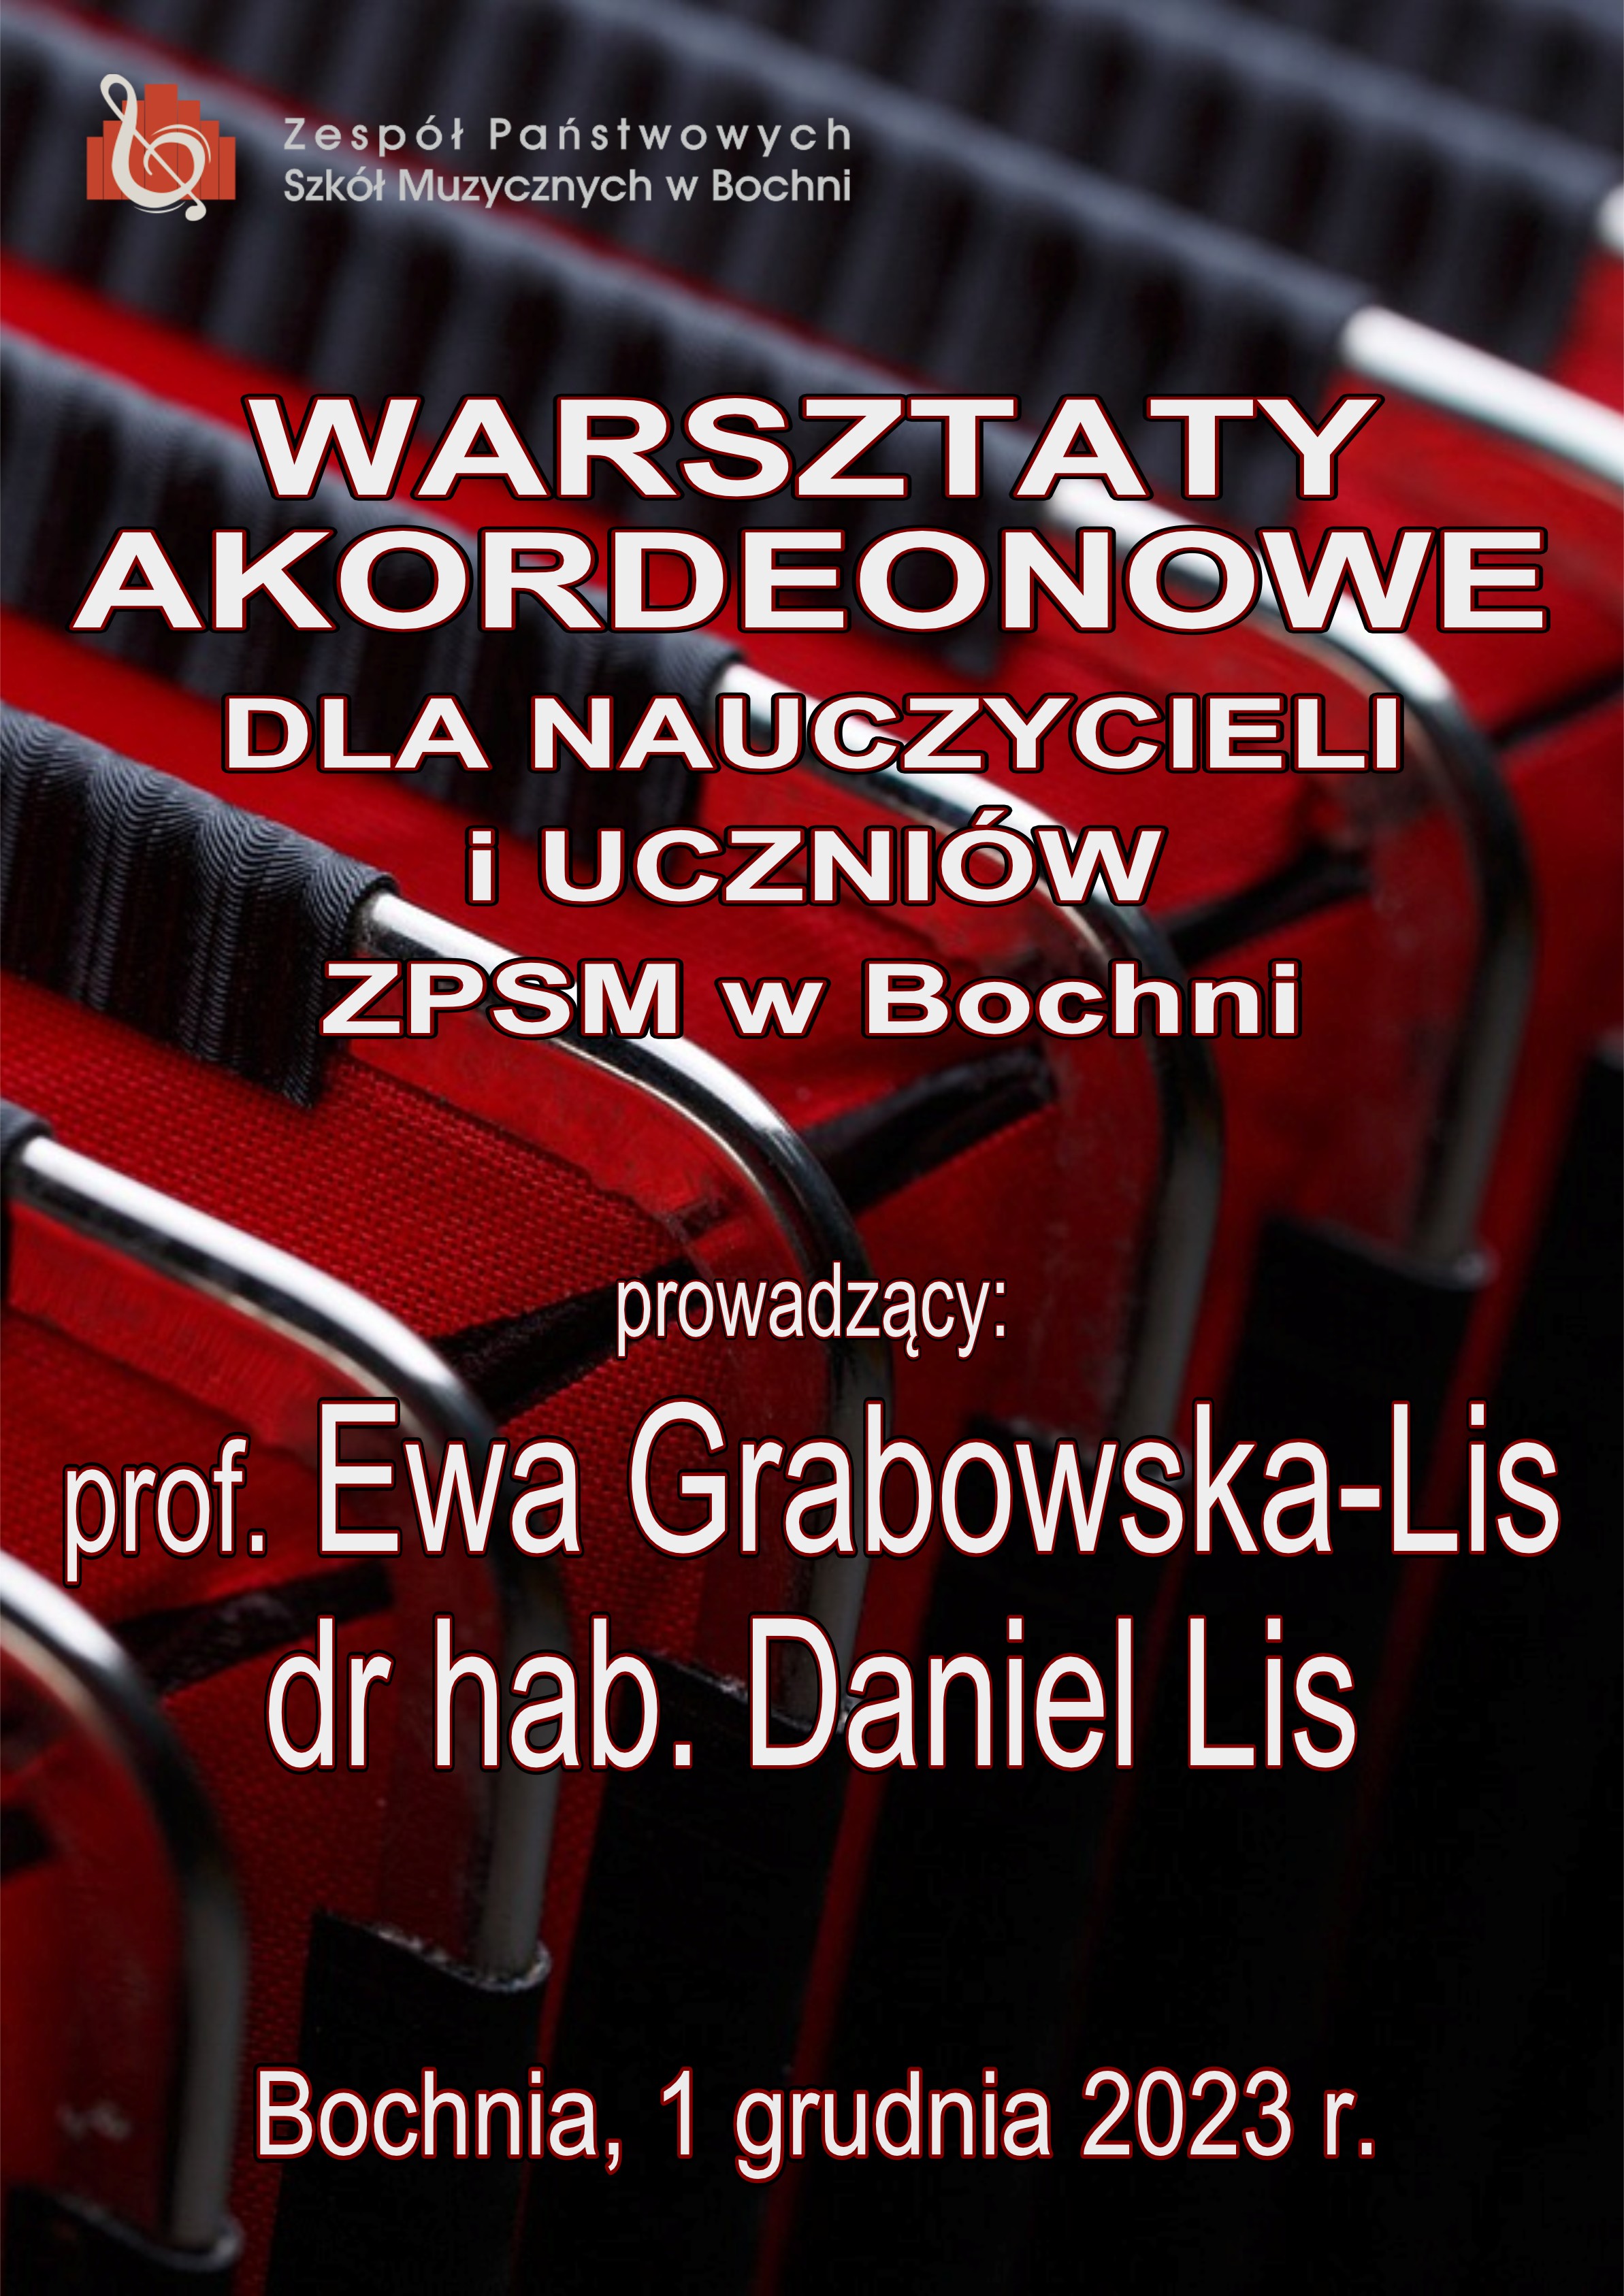 Warsztaty akordeonowe z panią prof. Ewą Grabowską - Lis oraz panem dr hab. Danielem Lisem 1.12.2023 r.